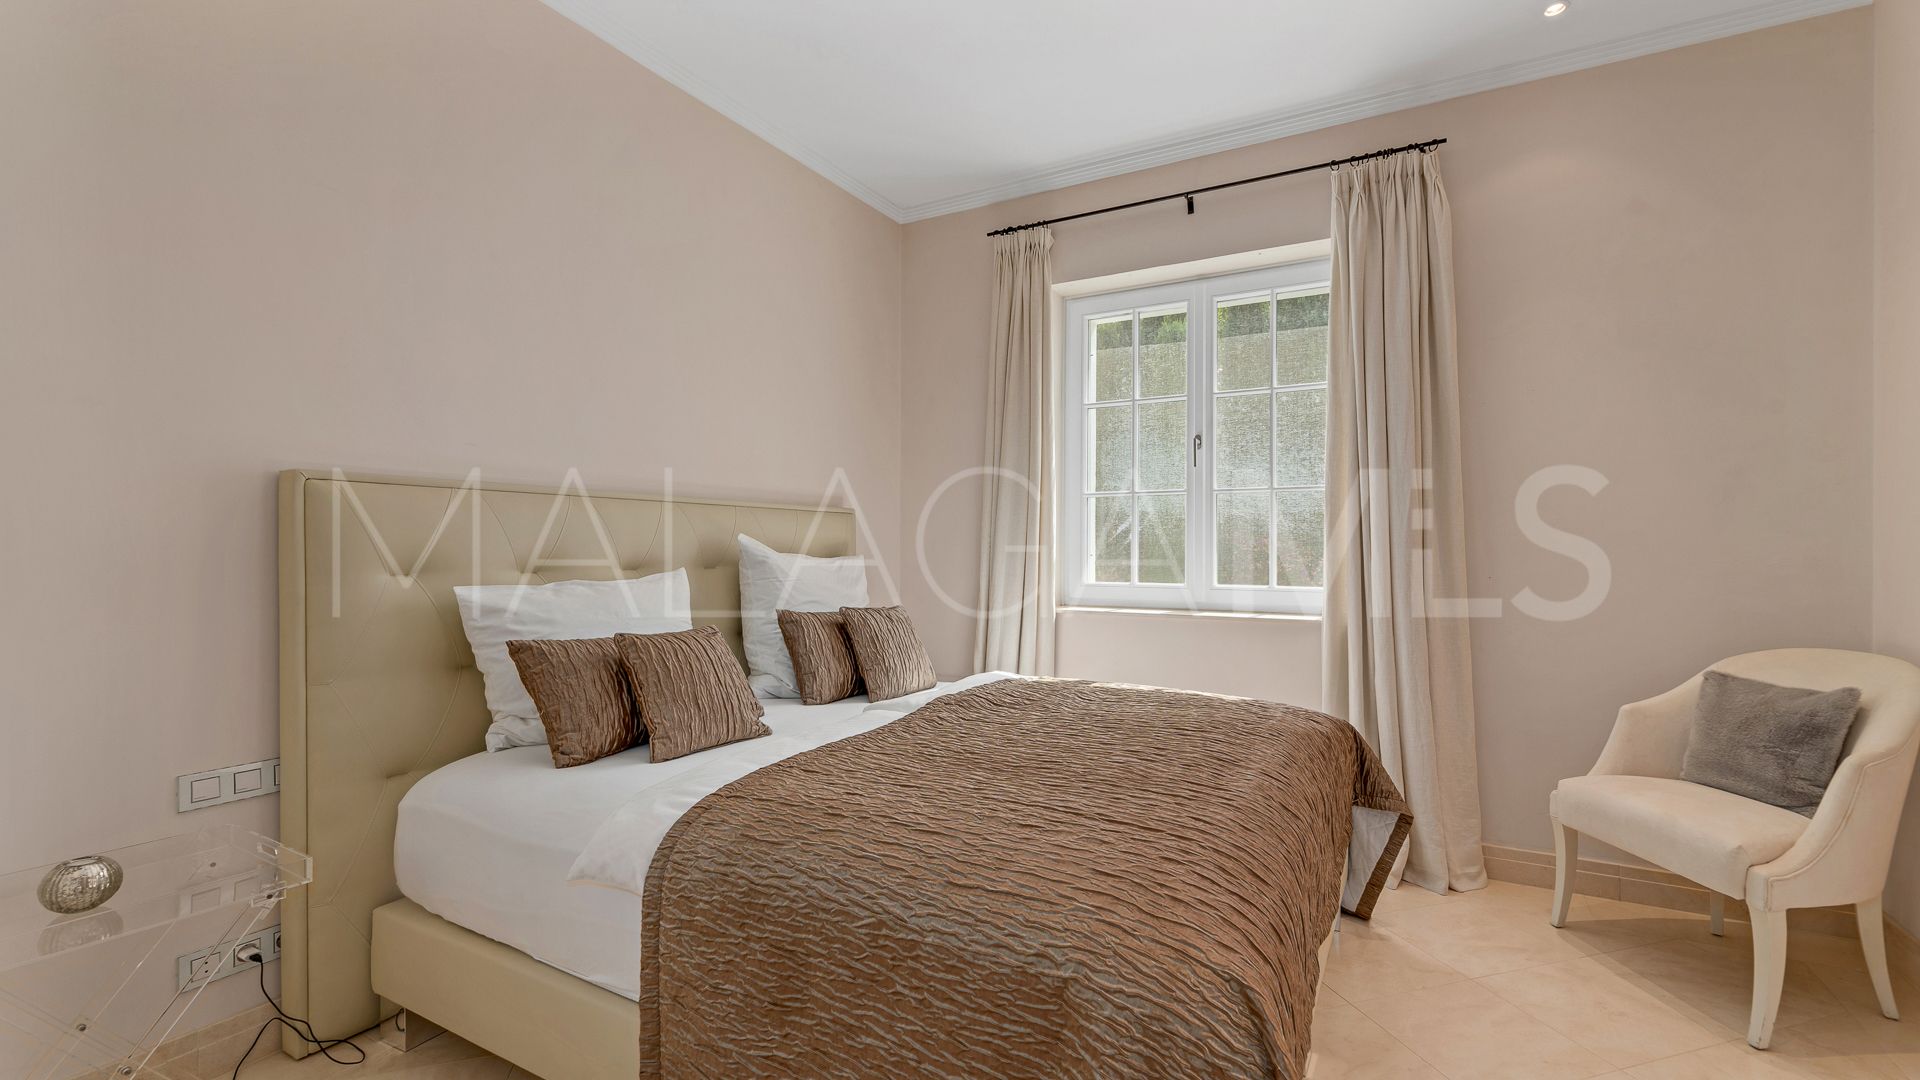 5 bedrooms villa in Sierra Blanca for sale